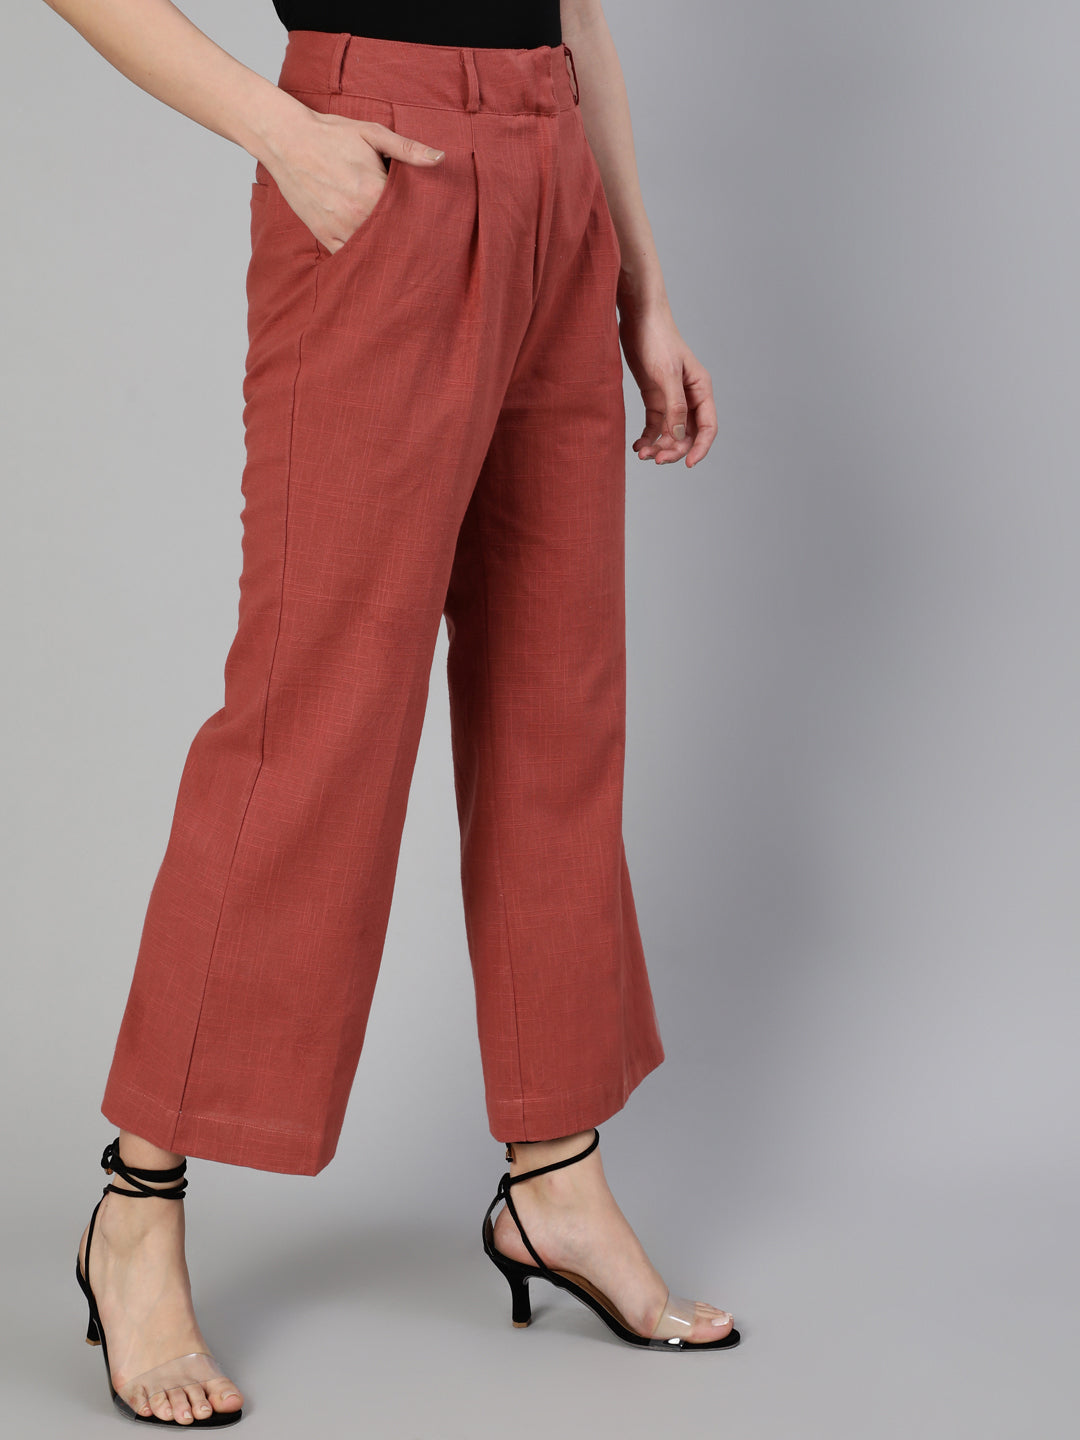 Buy women's casual pants with elastic waist,